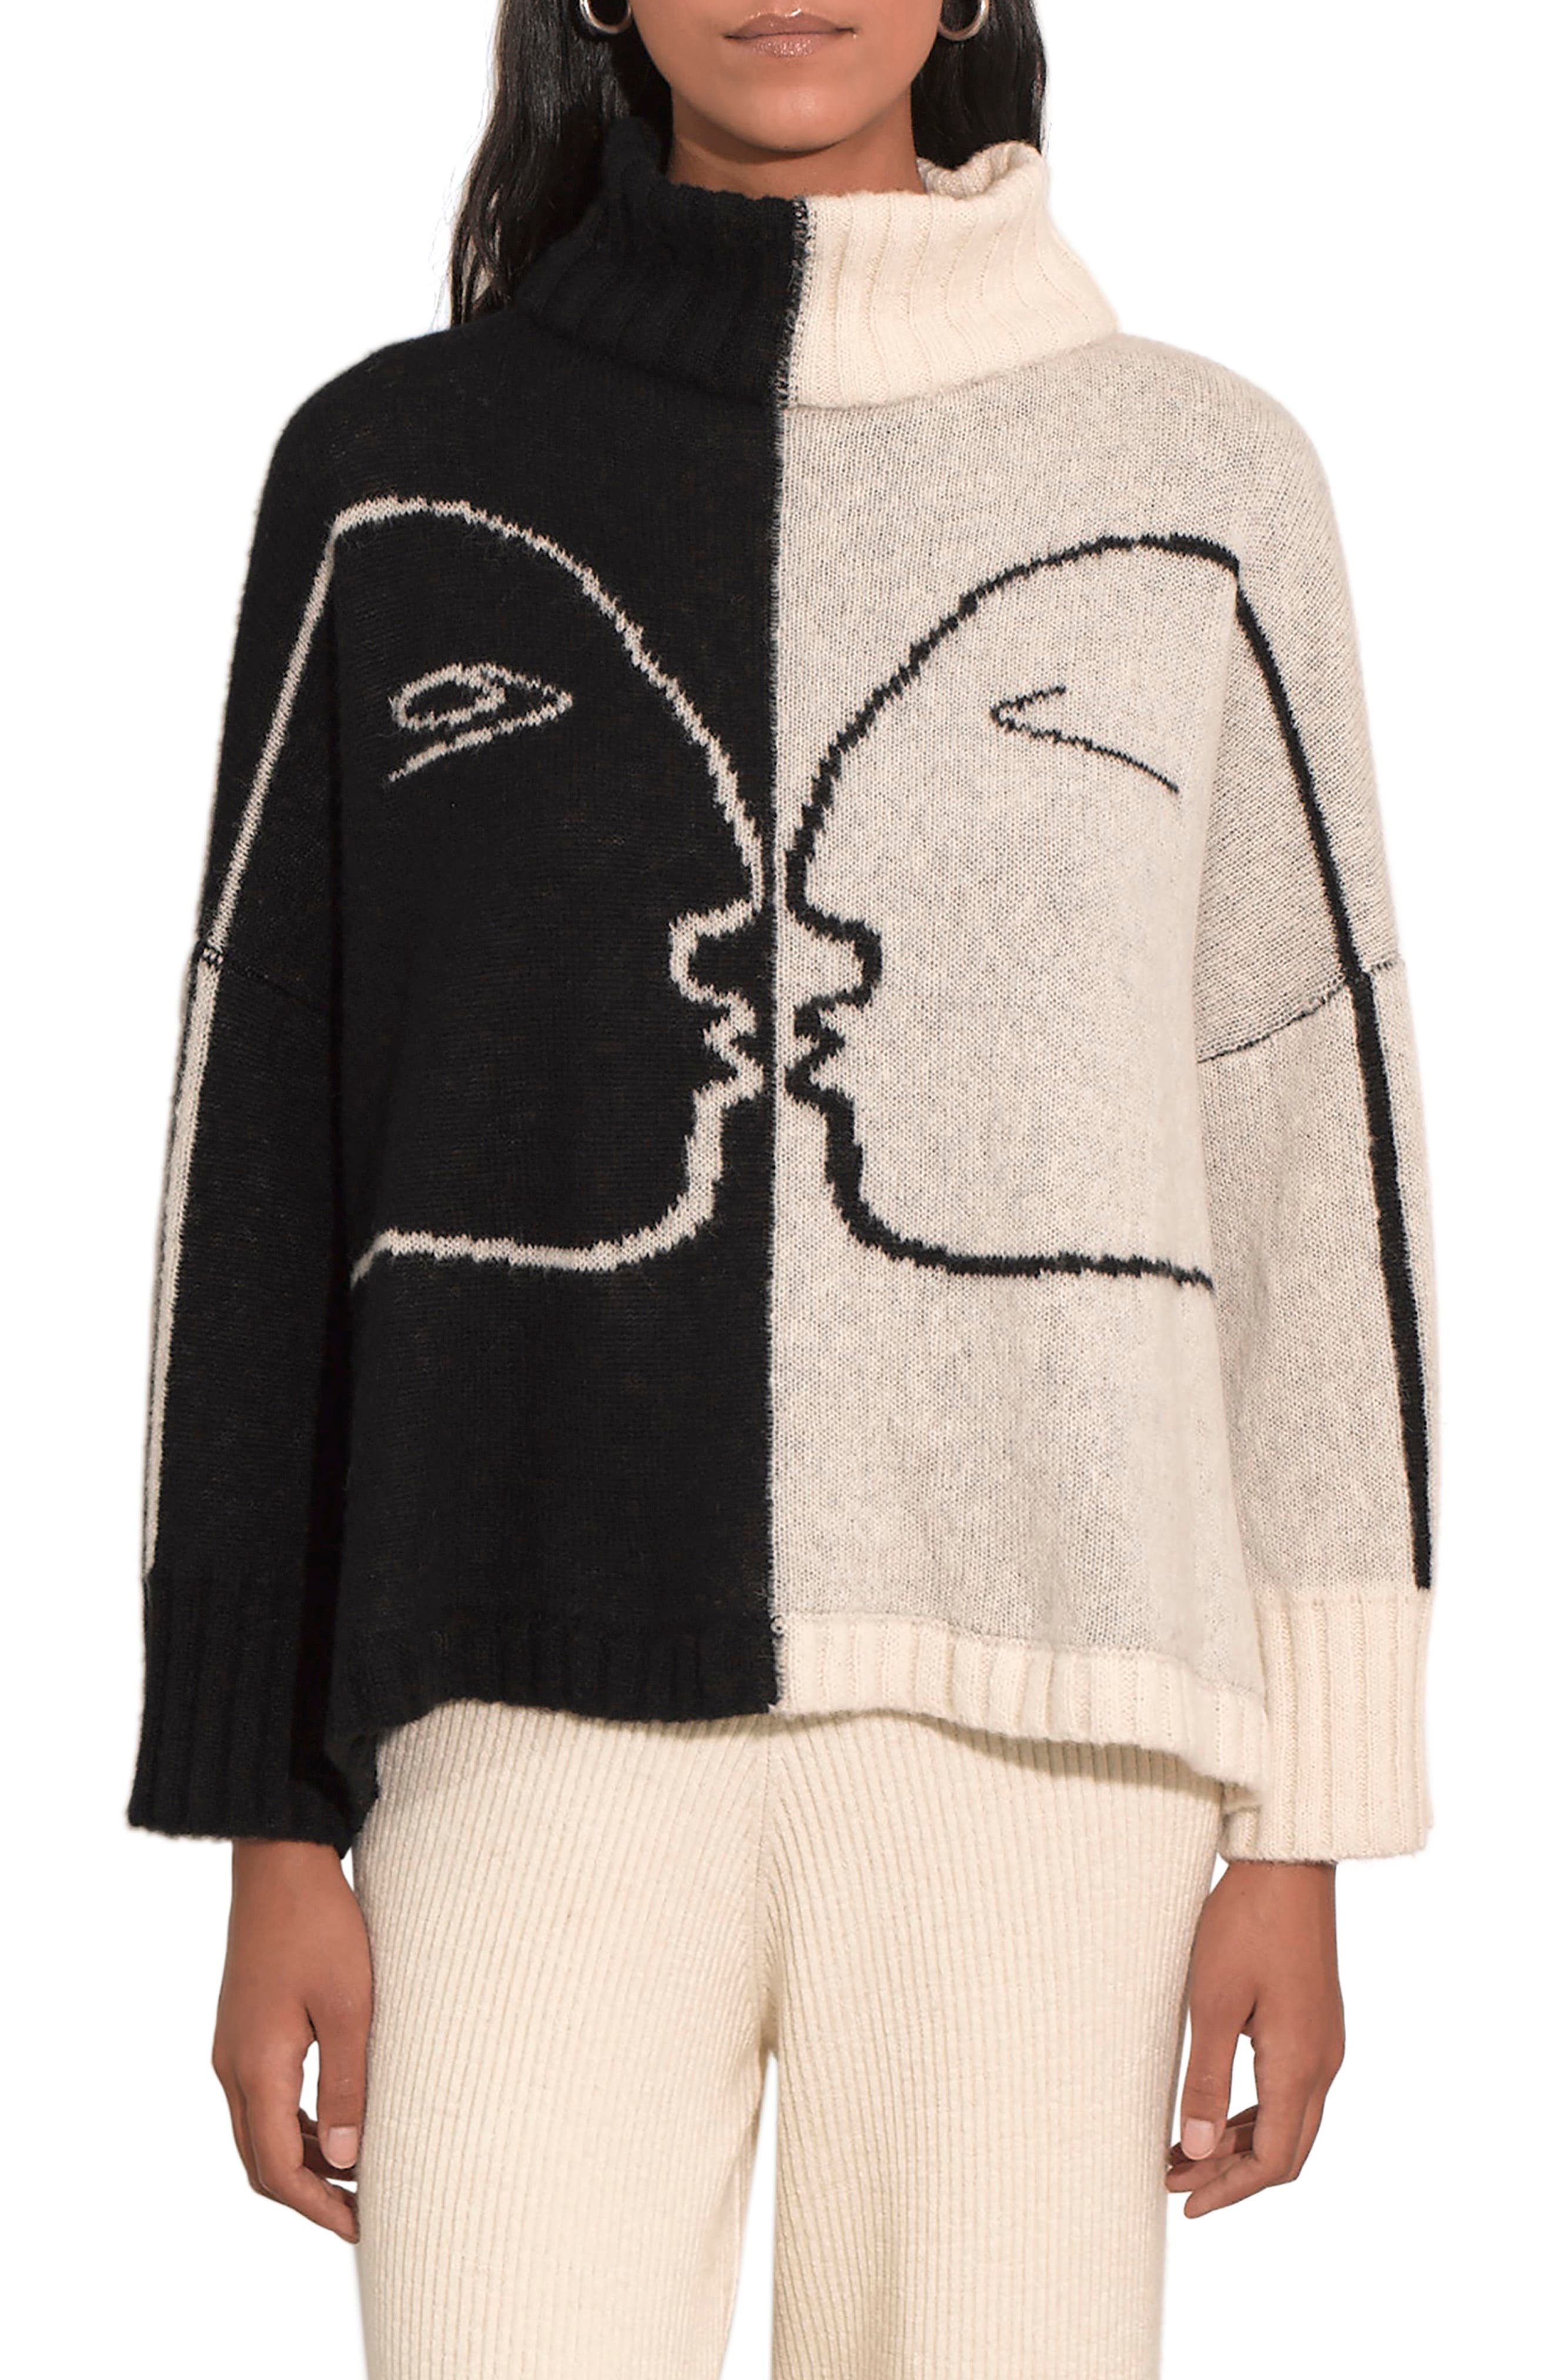 Eleven Six Love Alpaca Turtleneck Sweater in Ivory/Black Combo at Nordstrom